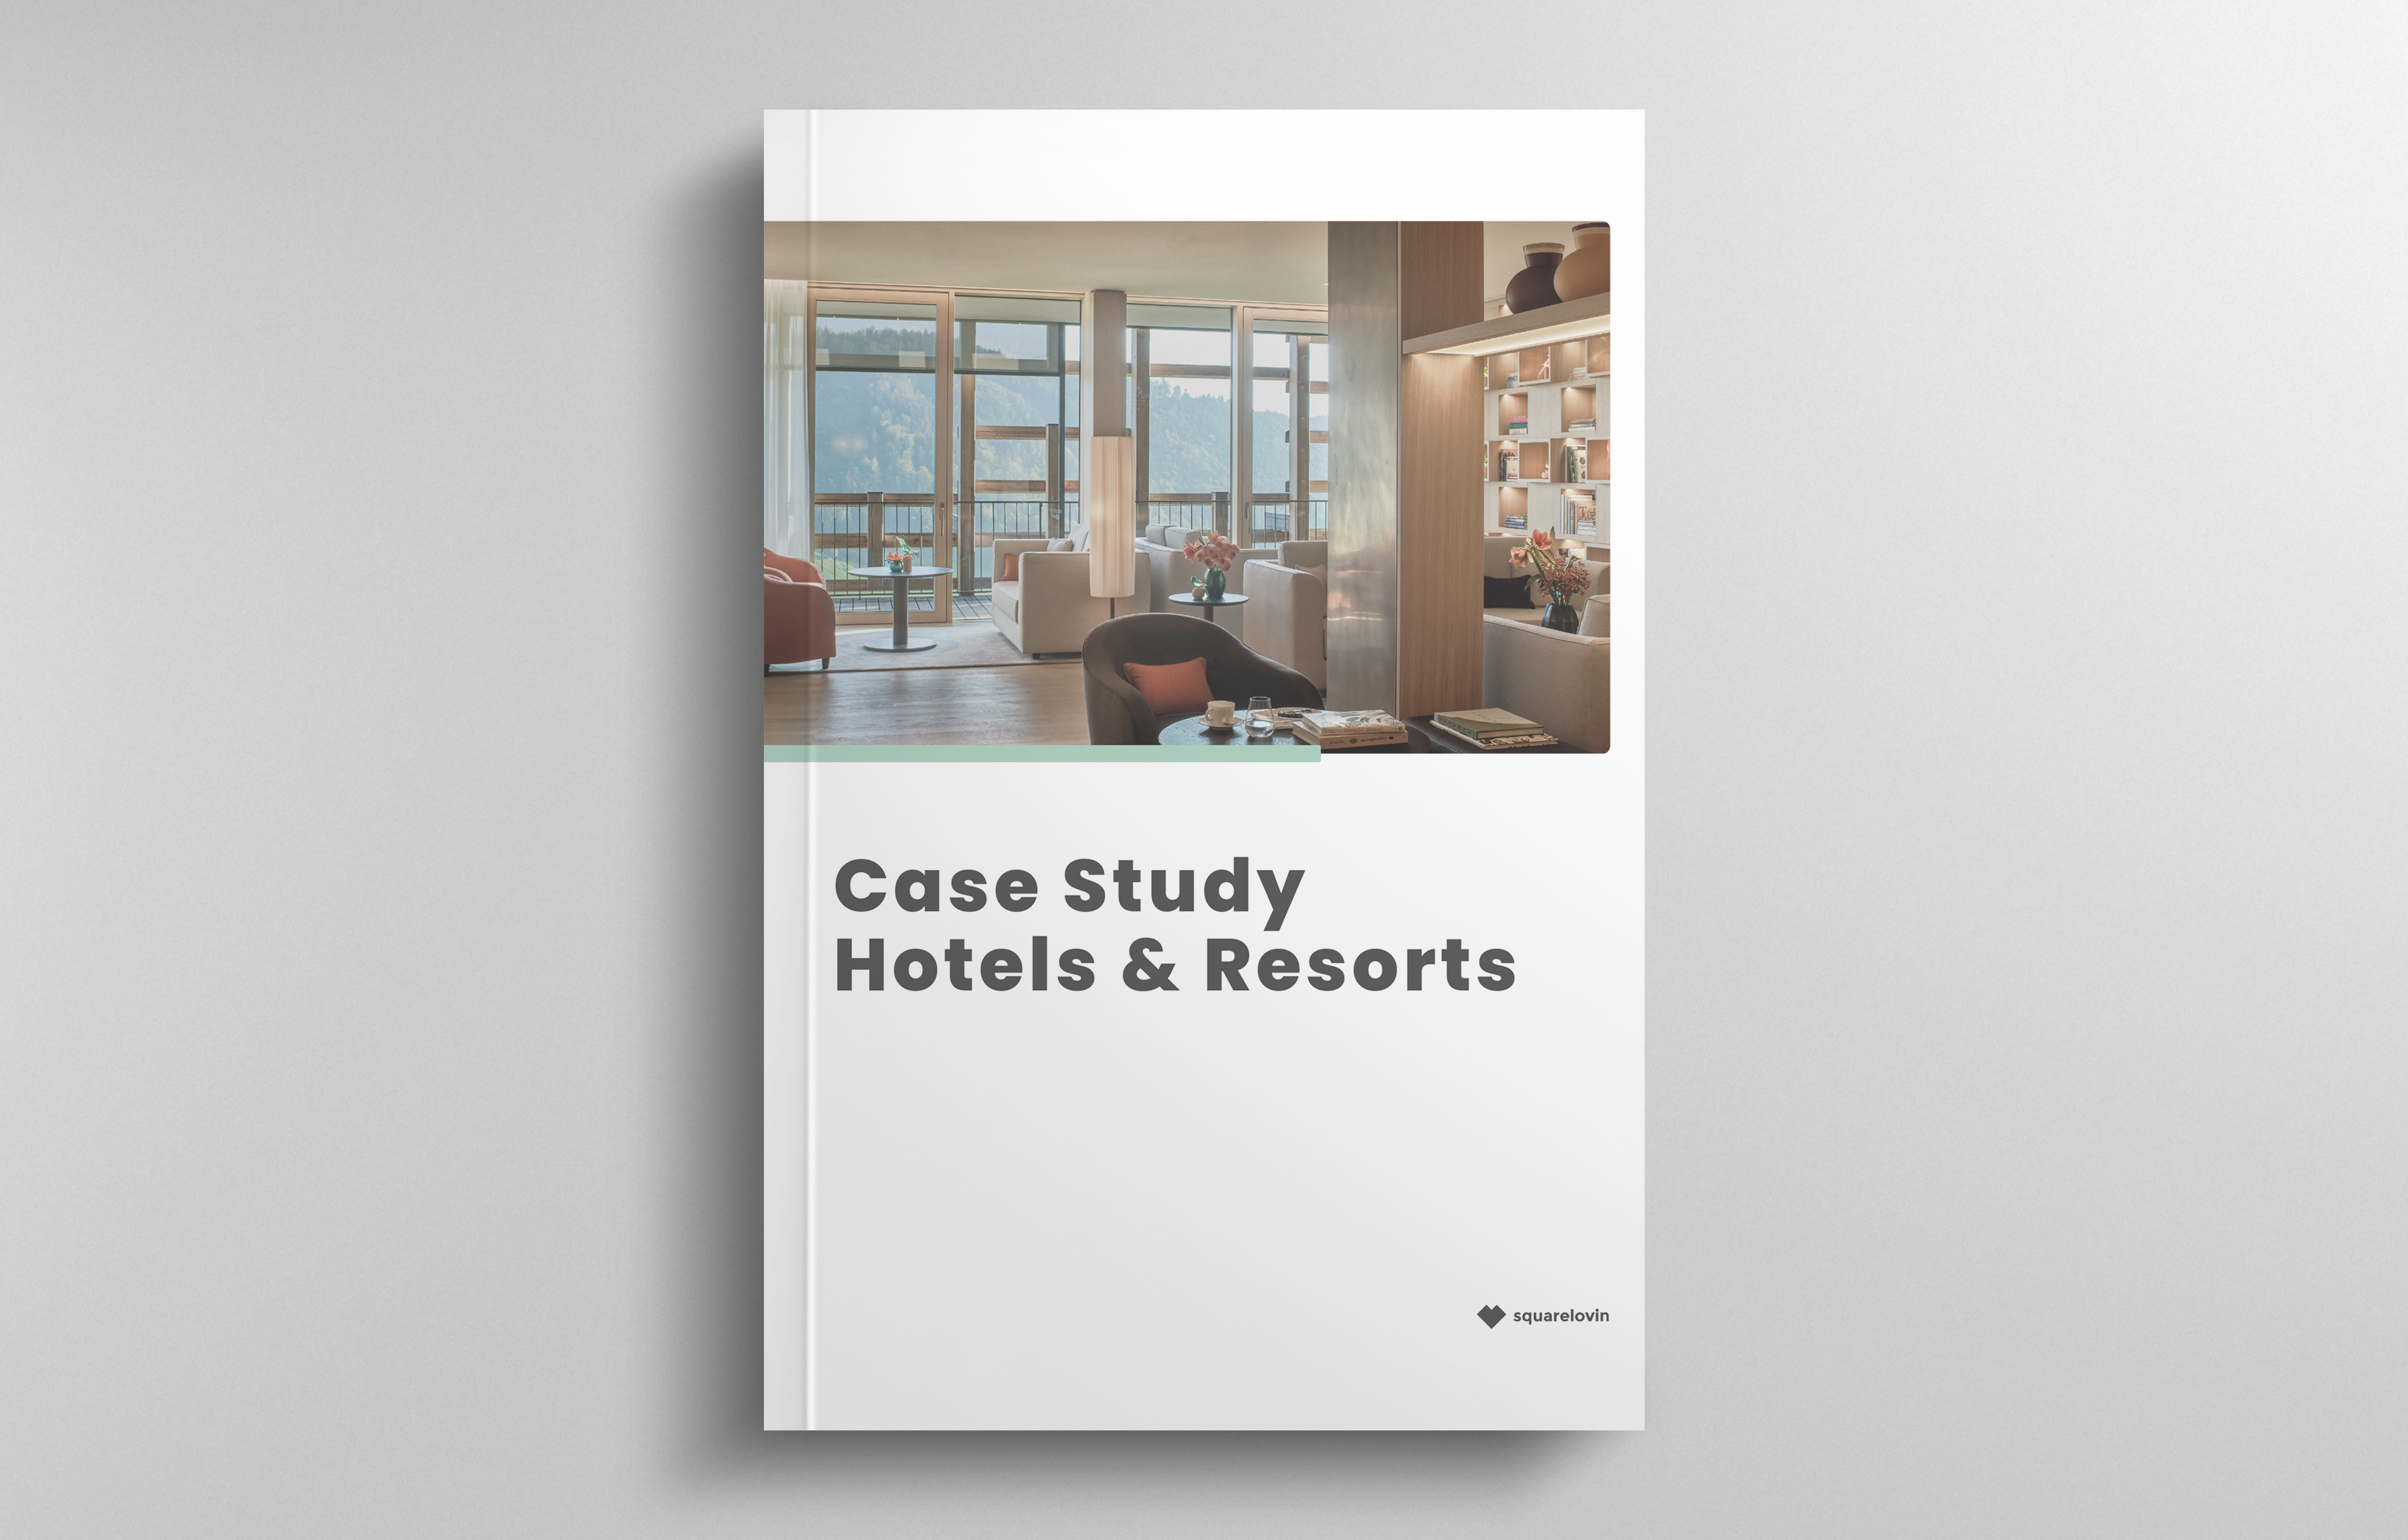 squarelovin_case-study_hotels&resorts_header_en